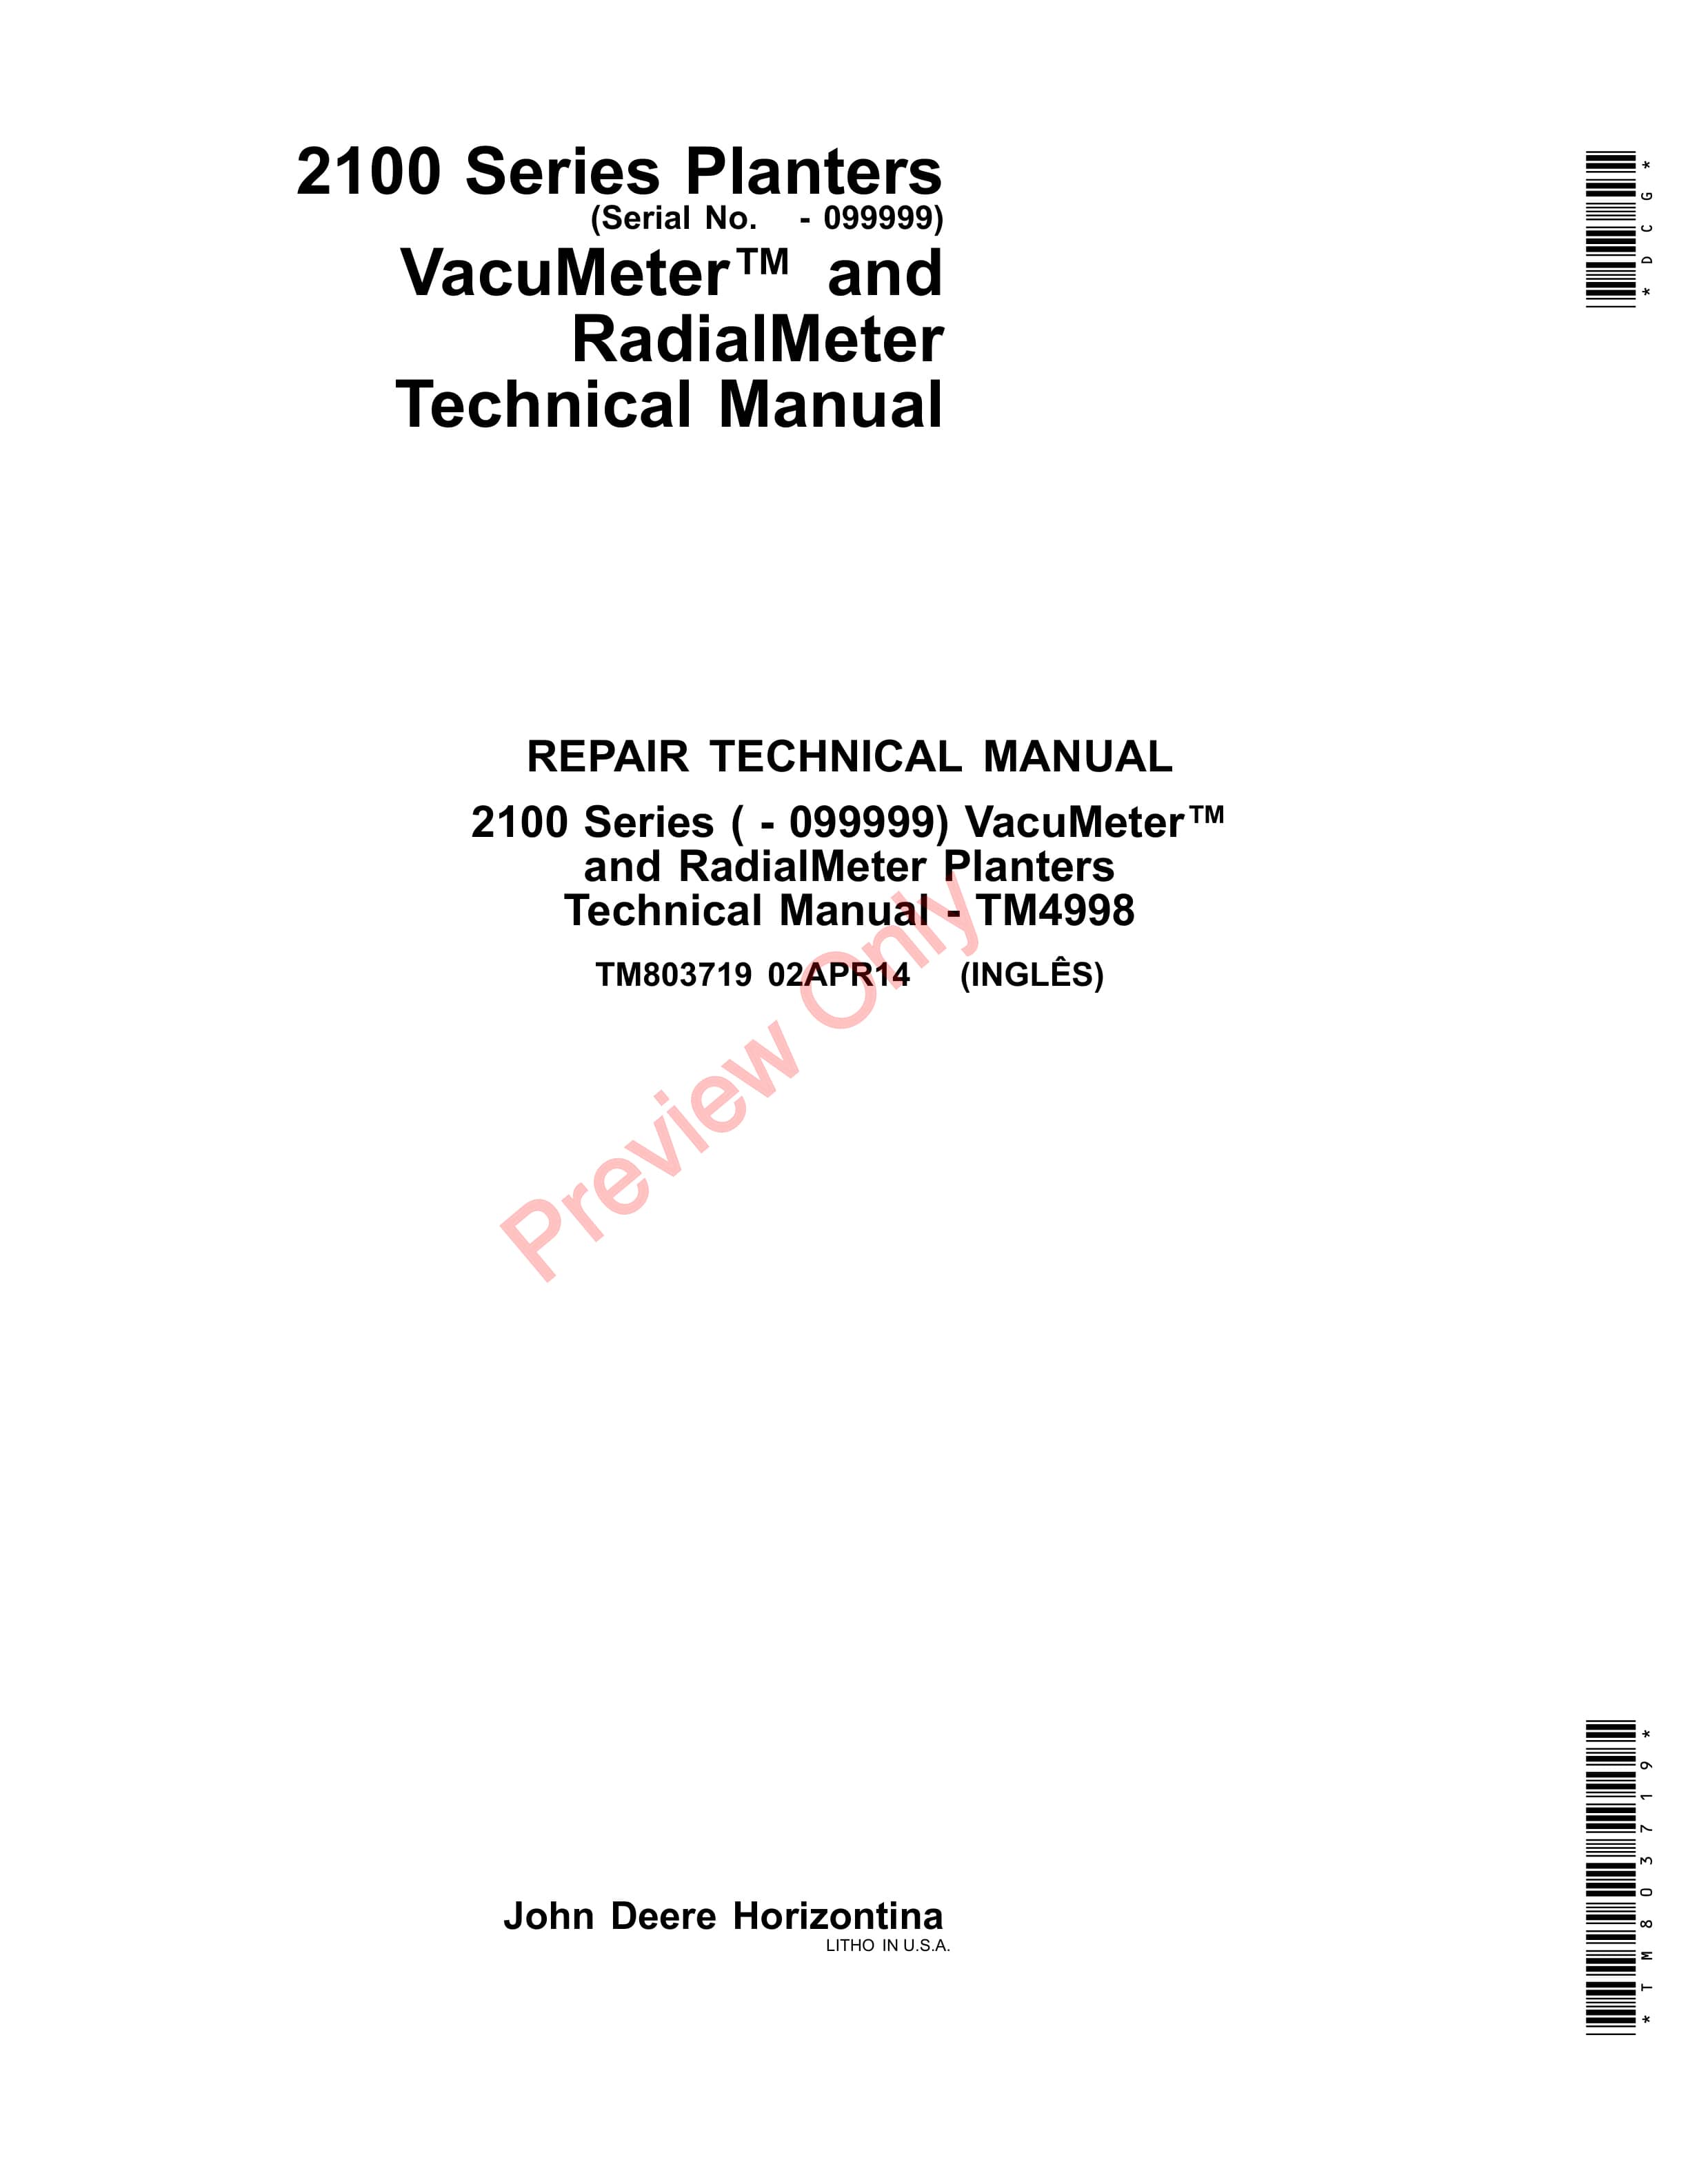 John Deere 2100 Series Planters VacuMeter and RadialMeter Technical Manual TM803719 02APR14 1